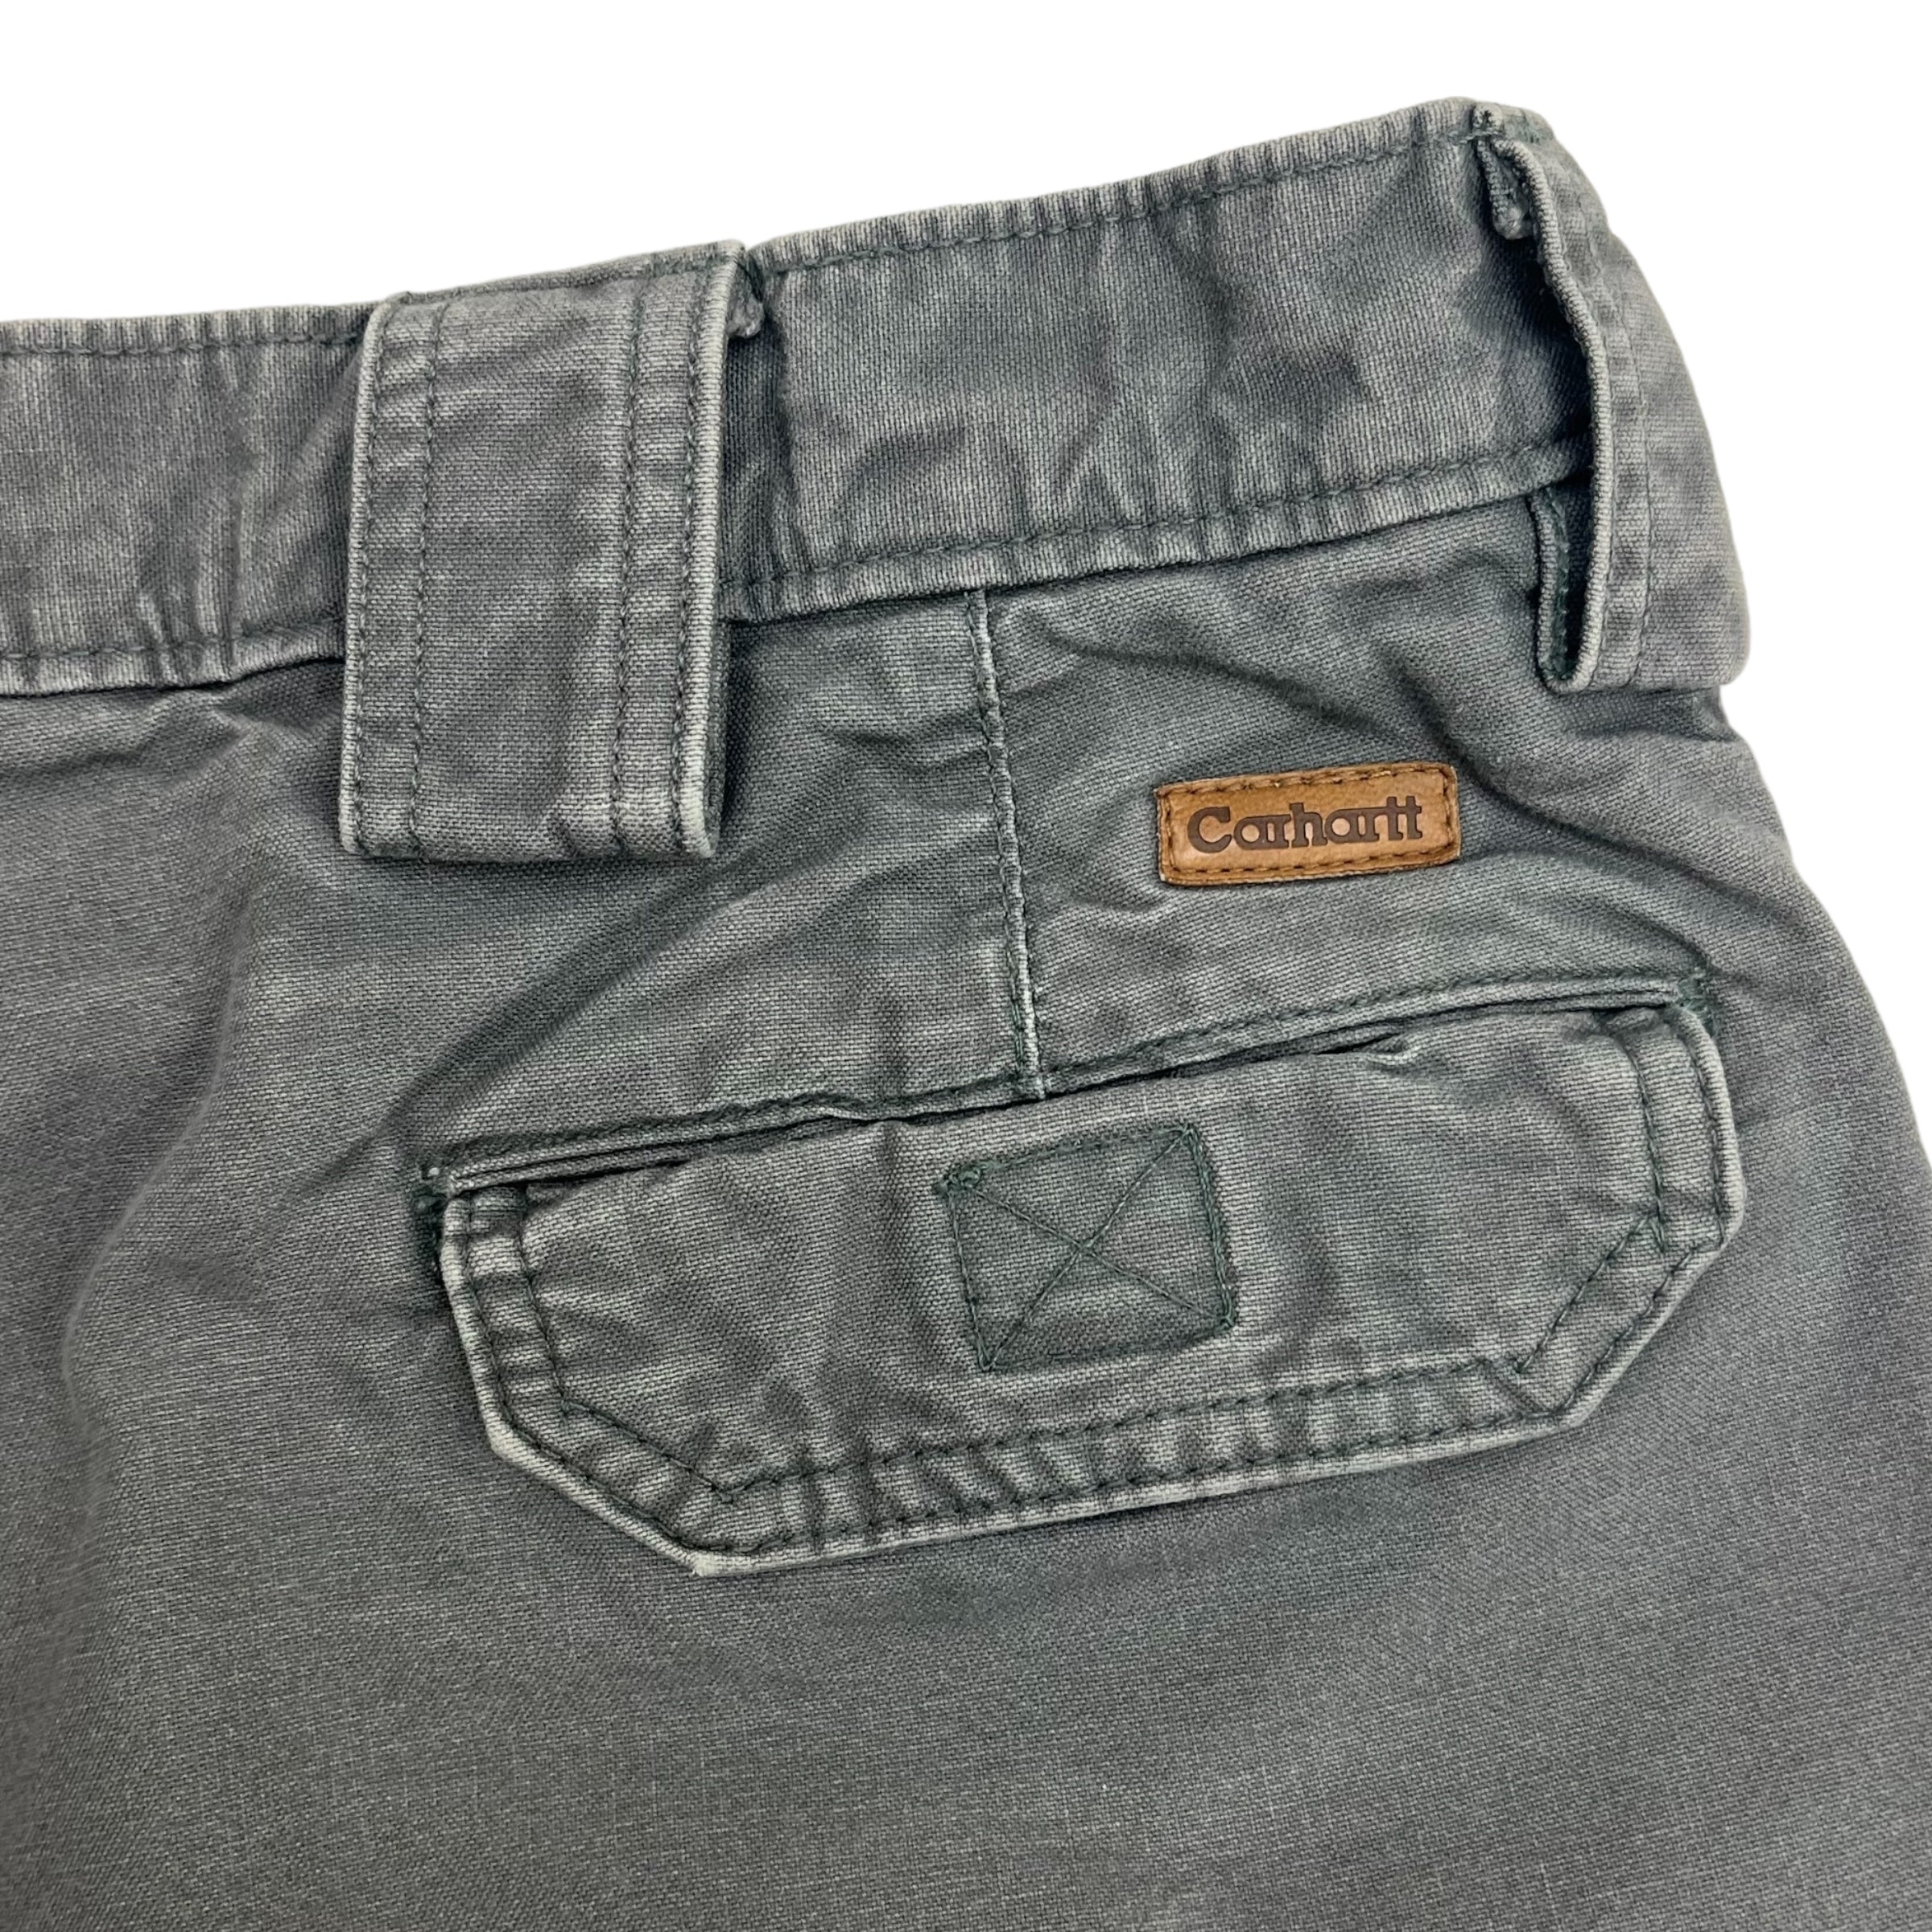 Vintage Carhartt Cargo Shorts Grey